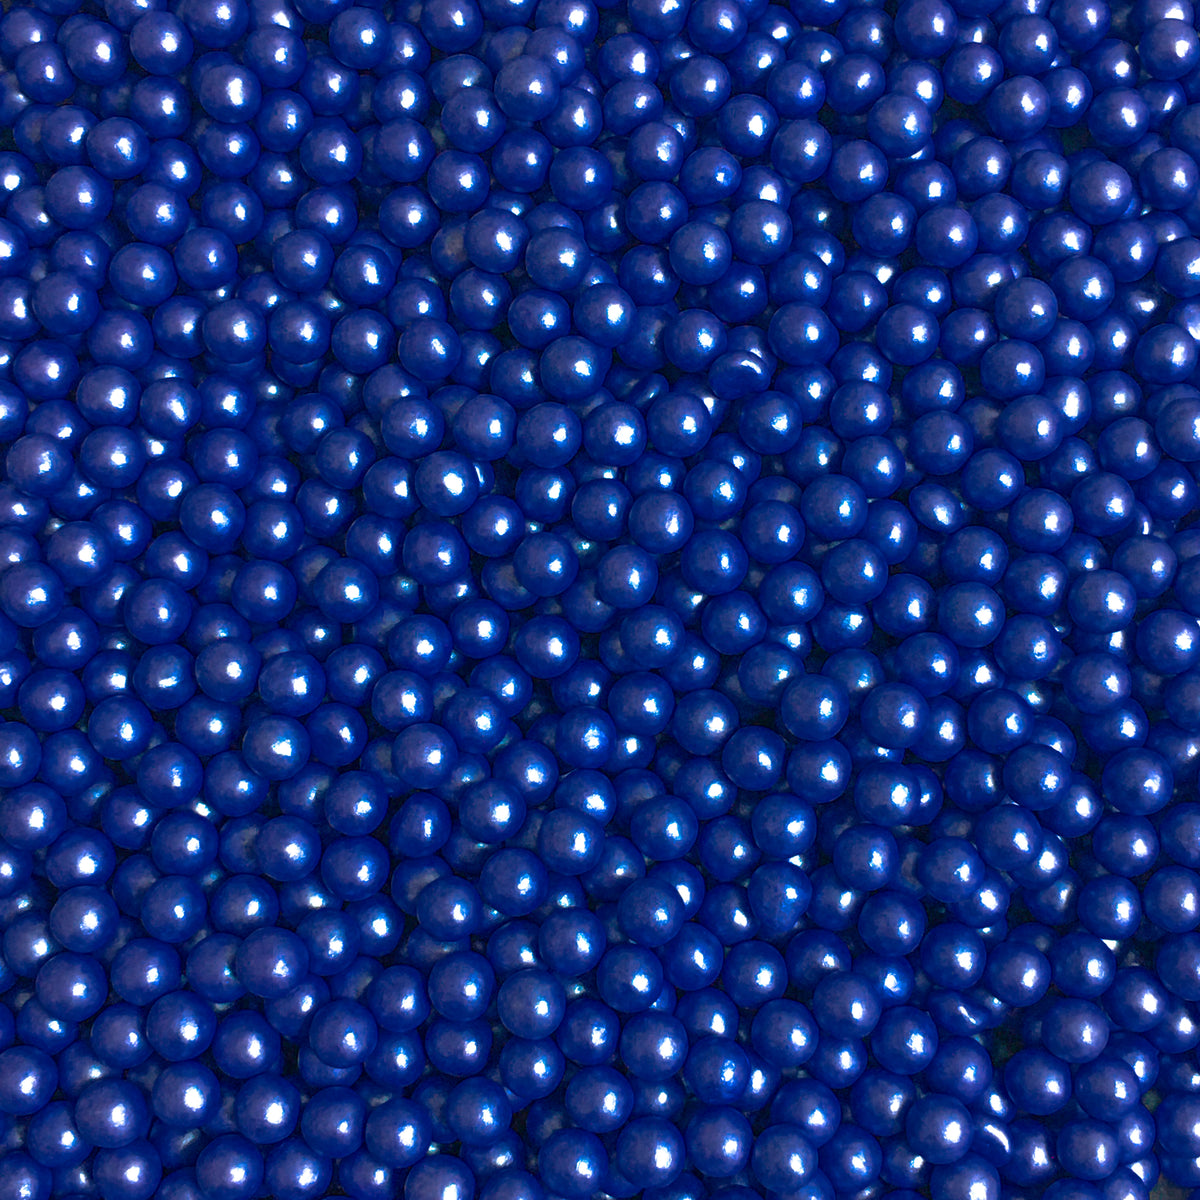 8MM Blue Edible Pearls